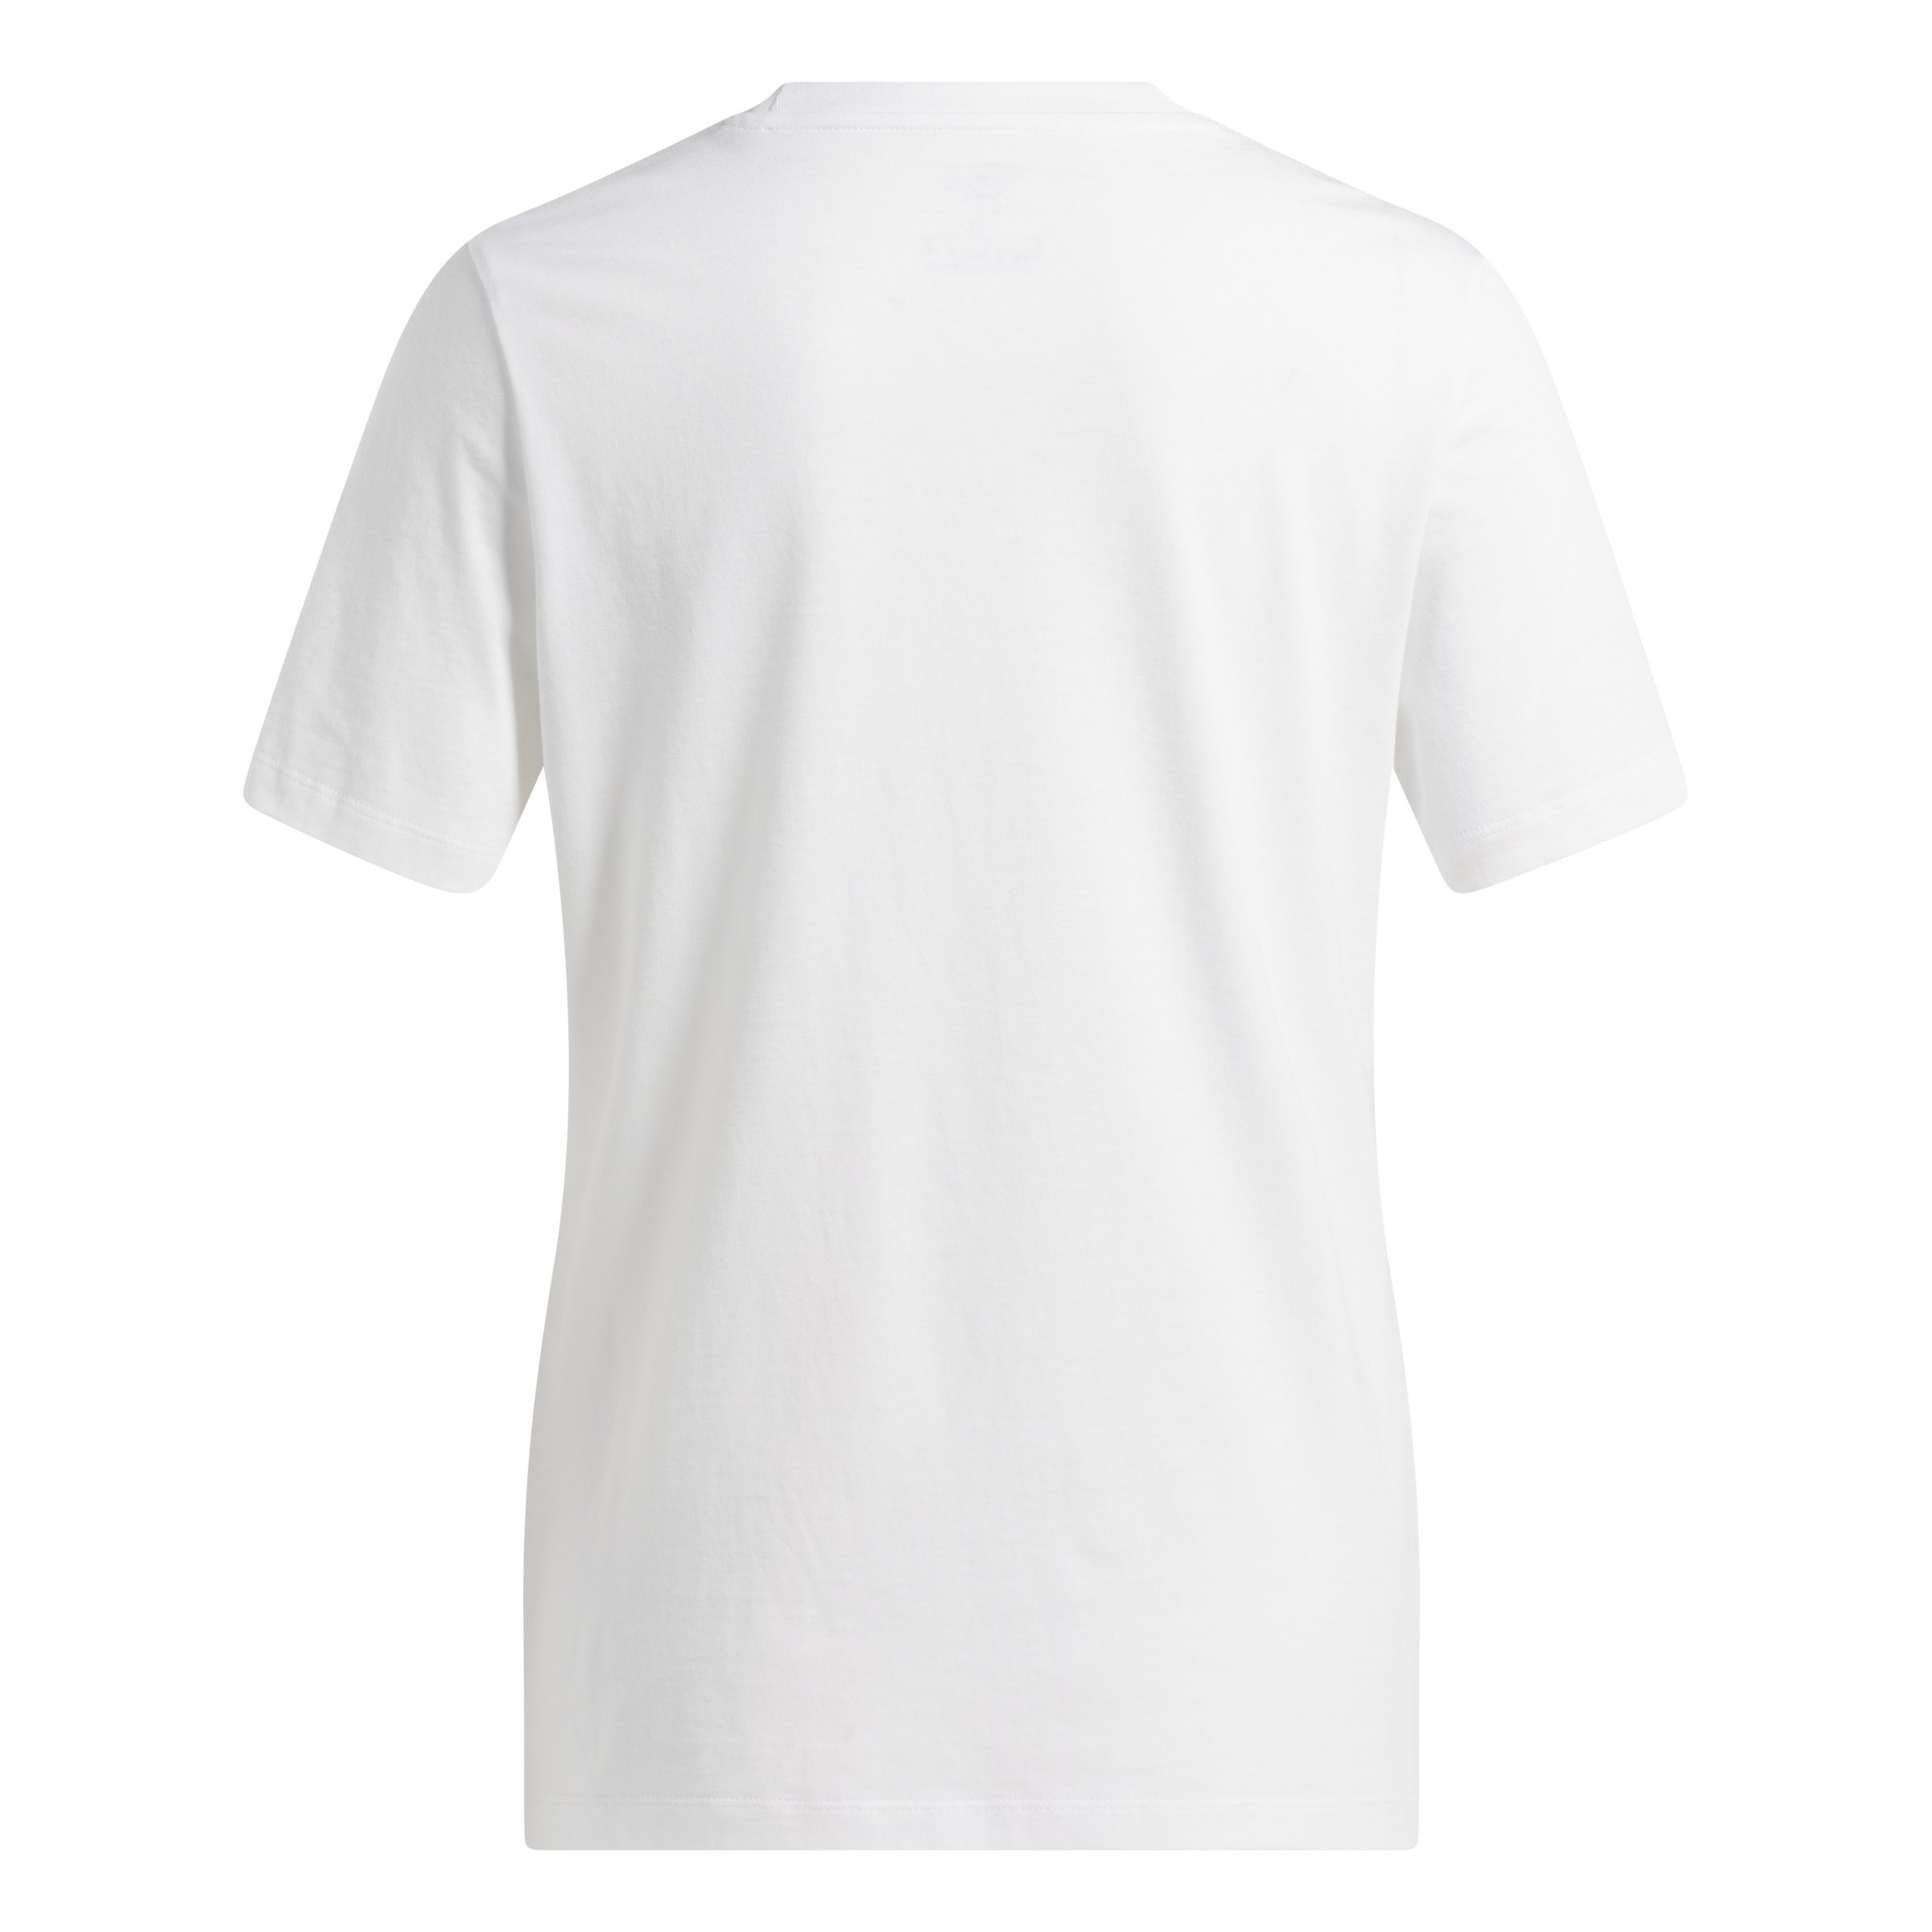 Reebok T-Shirt BL white RI Tee